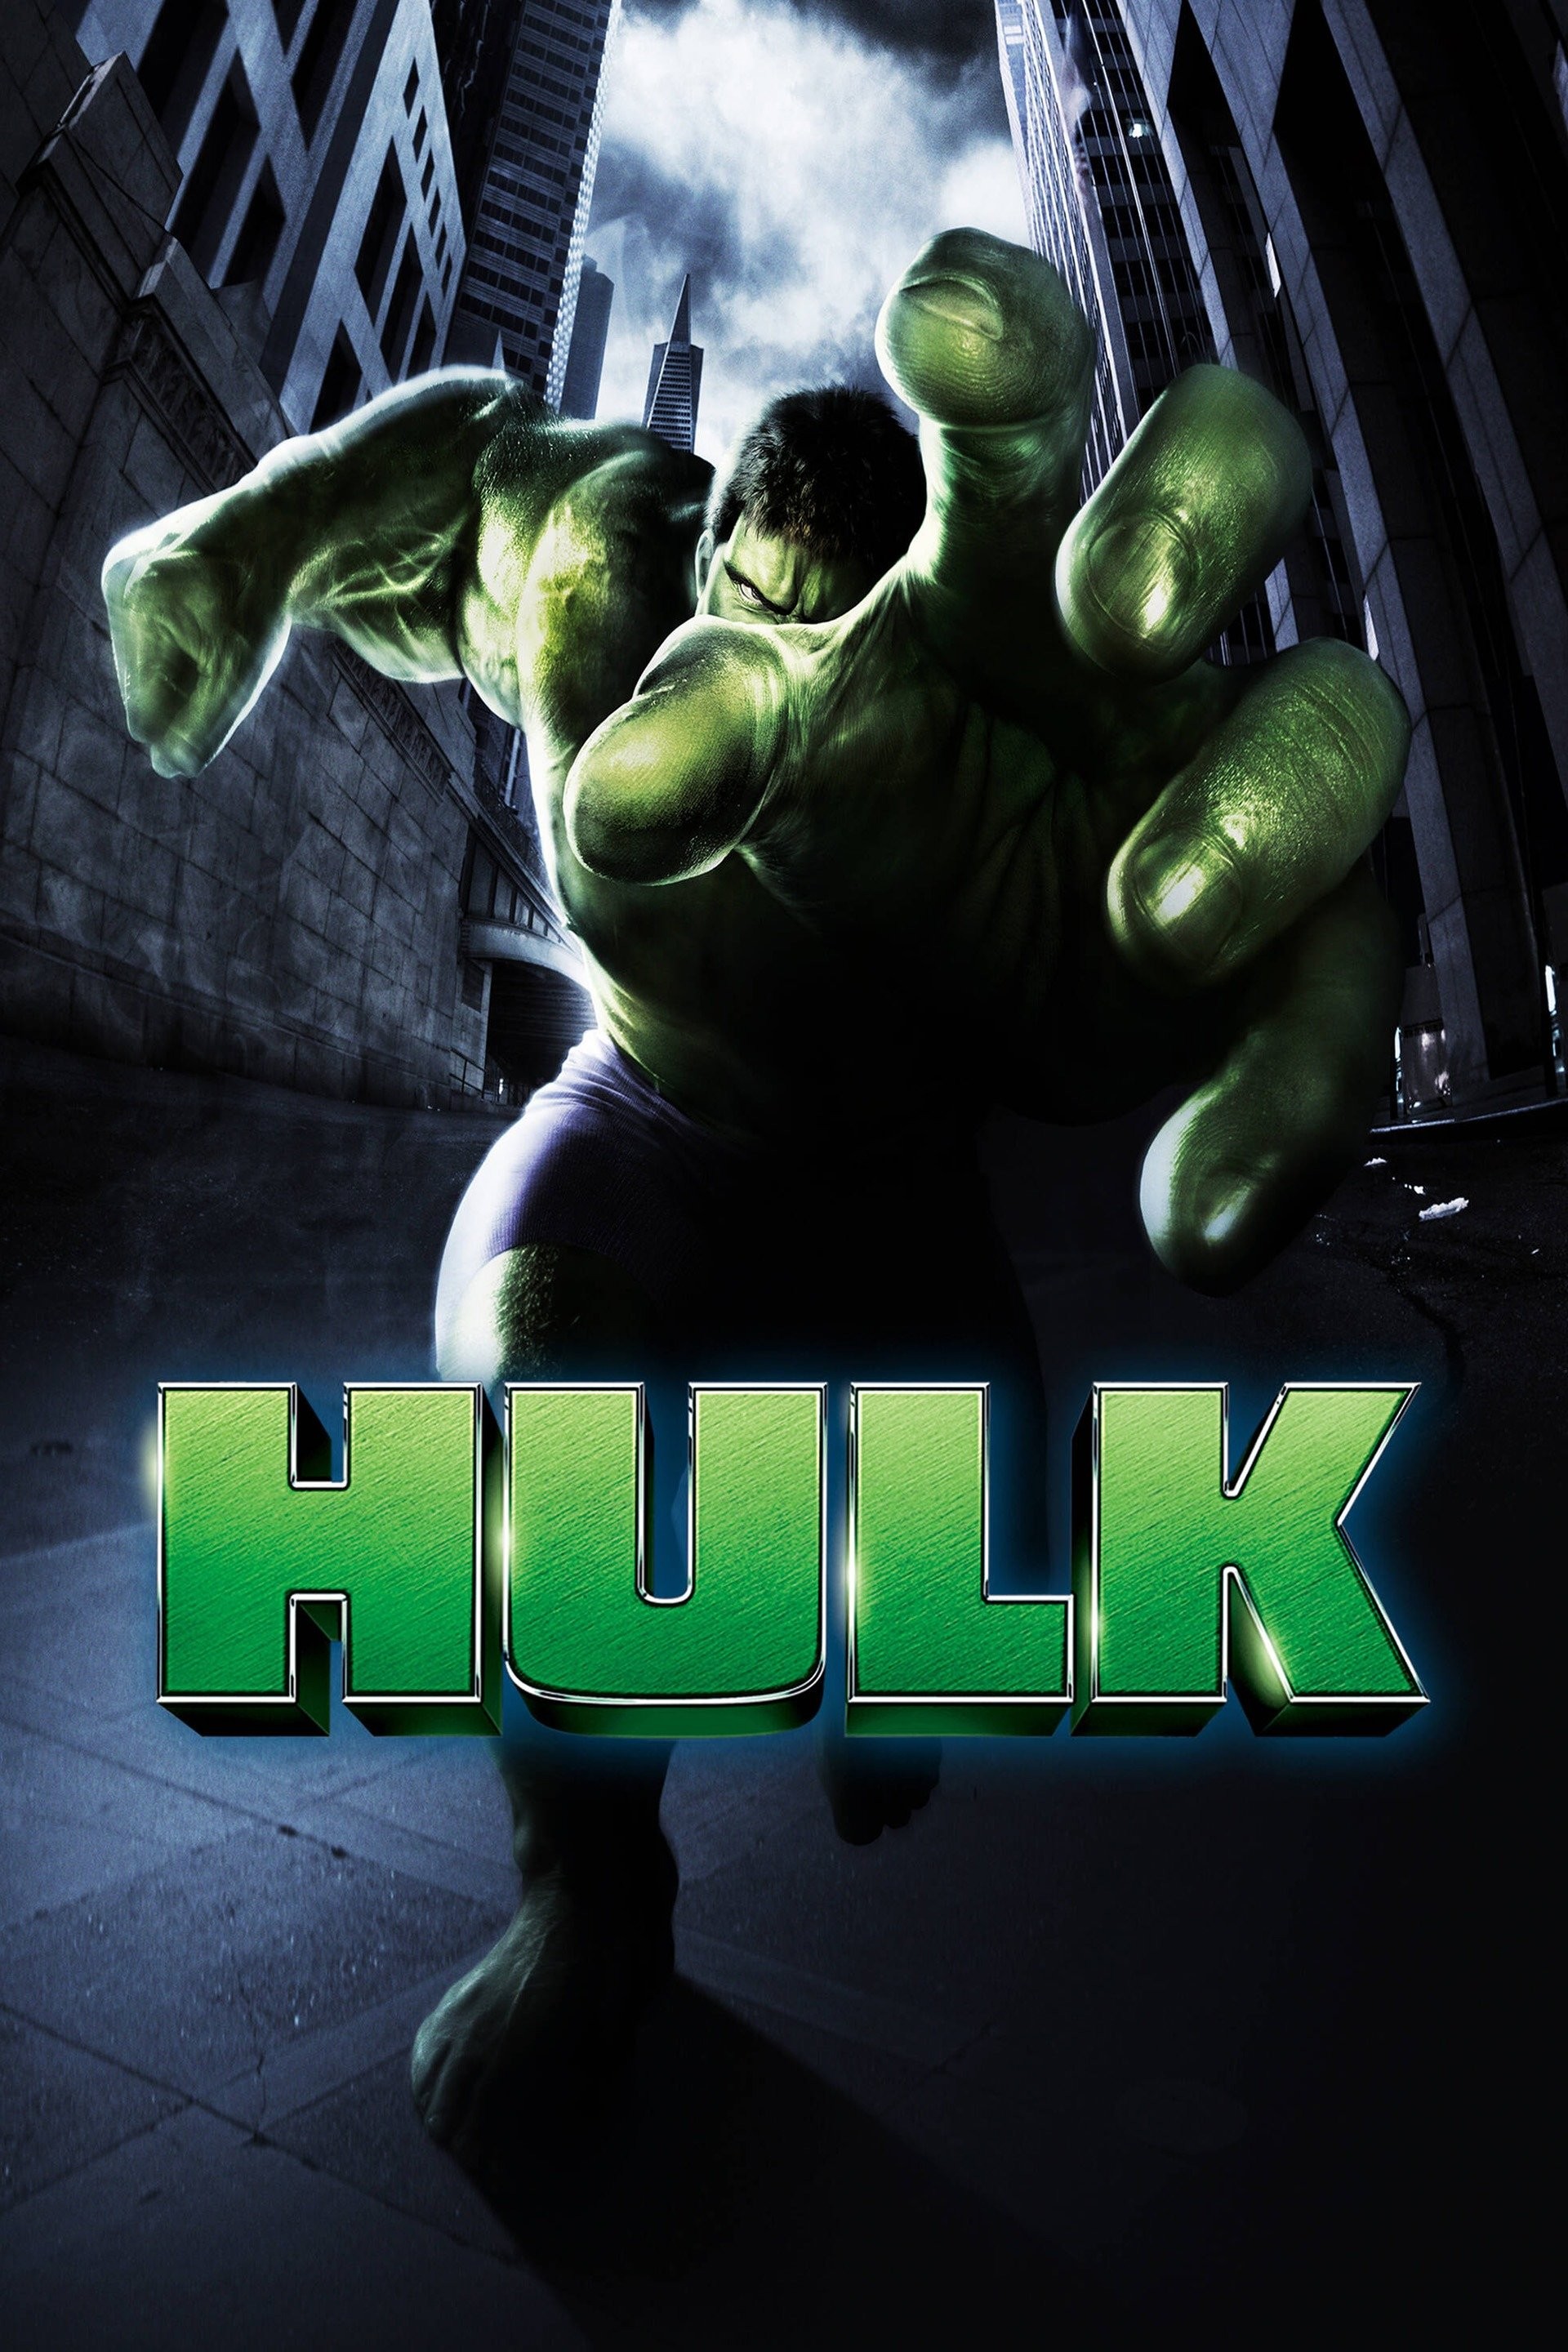 Hulk Photos and Images